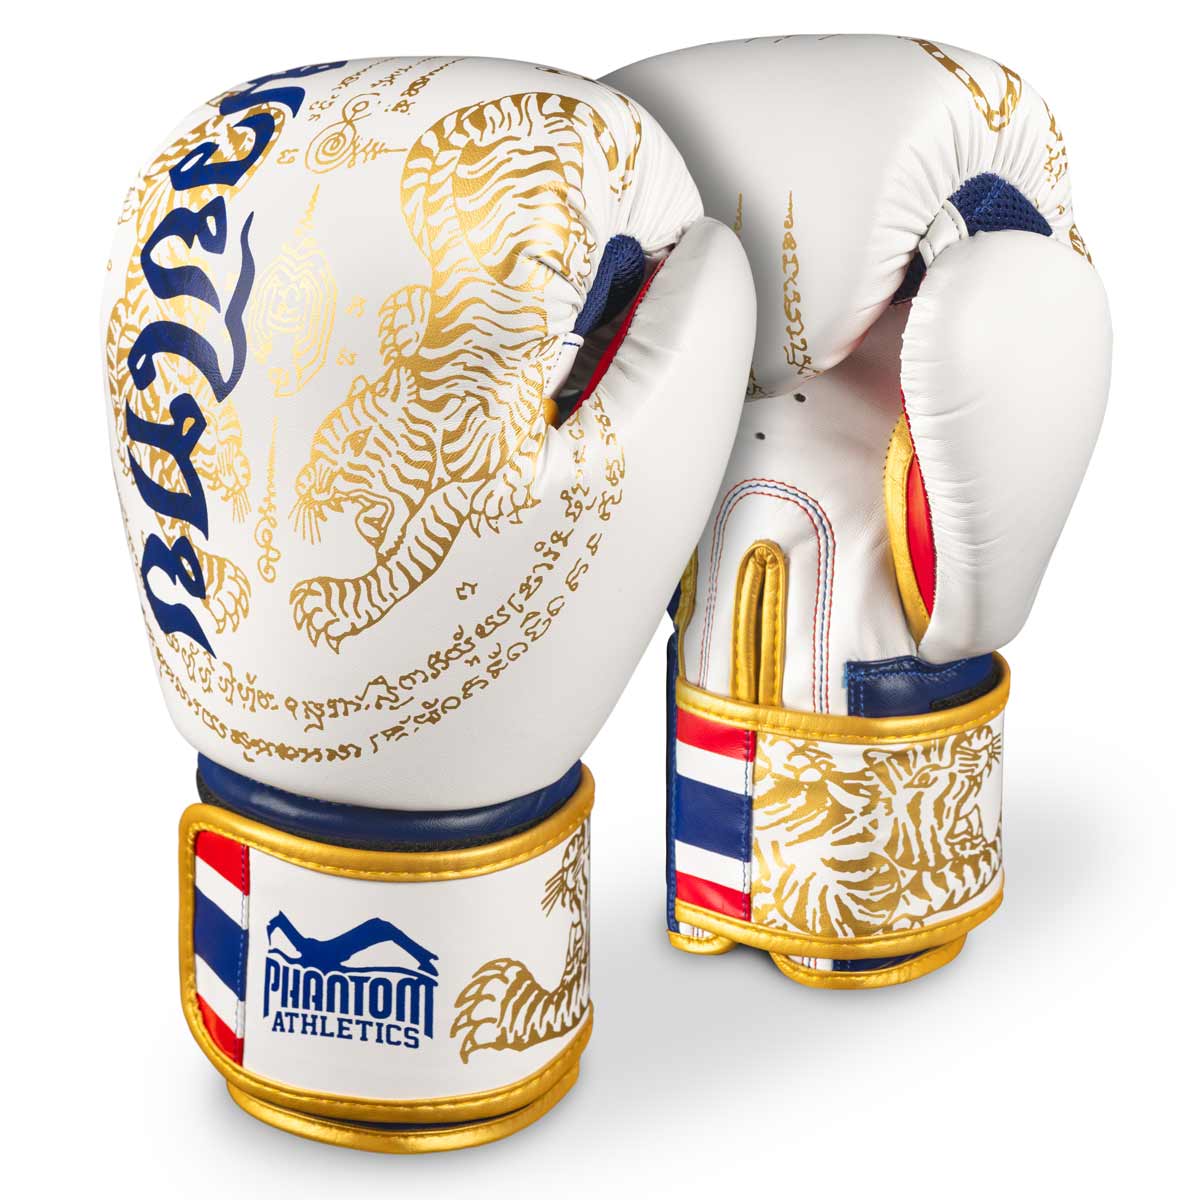 Thajské boxerské rukavice Phantom Muay s thajským potiskem v limitované edici bílá/zlatá/modrá/červená.